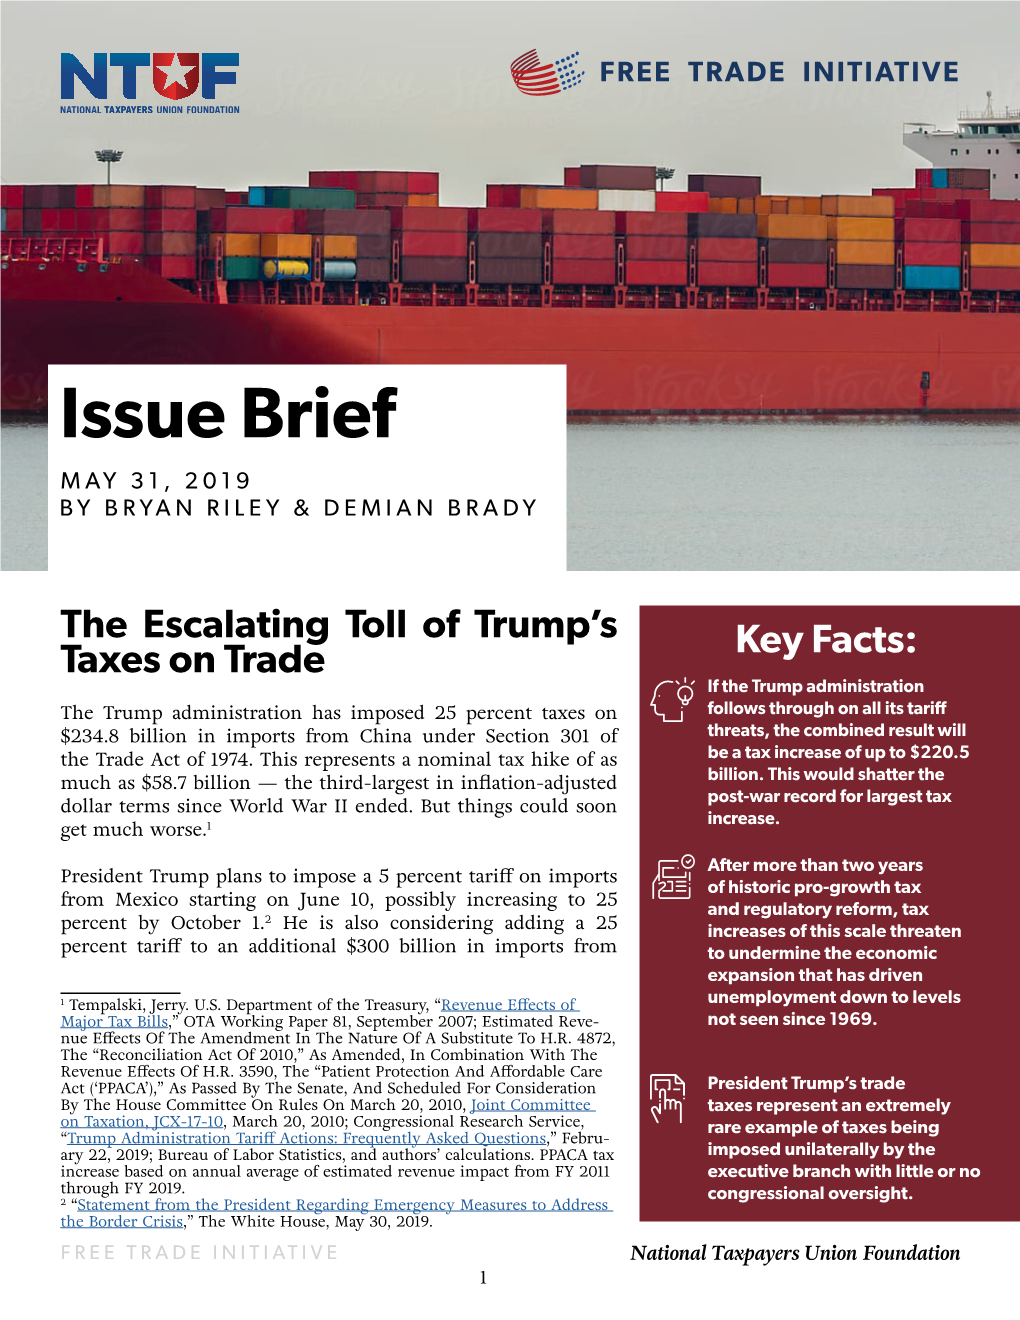 Issue Brief MAY 31, 2019 by BRYAN RILEY & DEMIAN BRADY